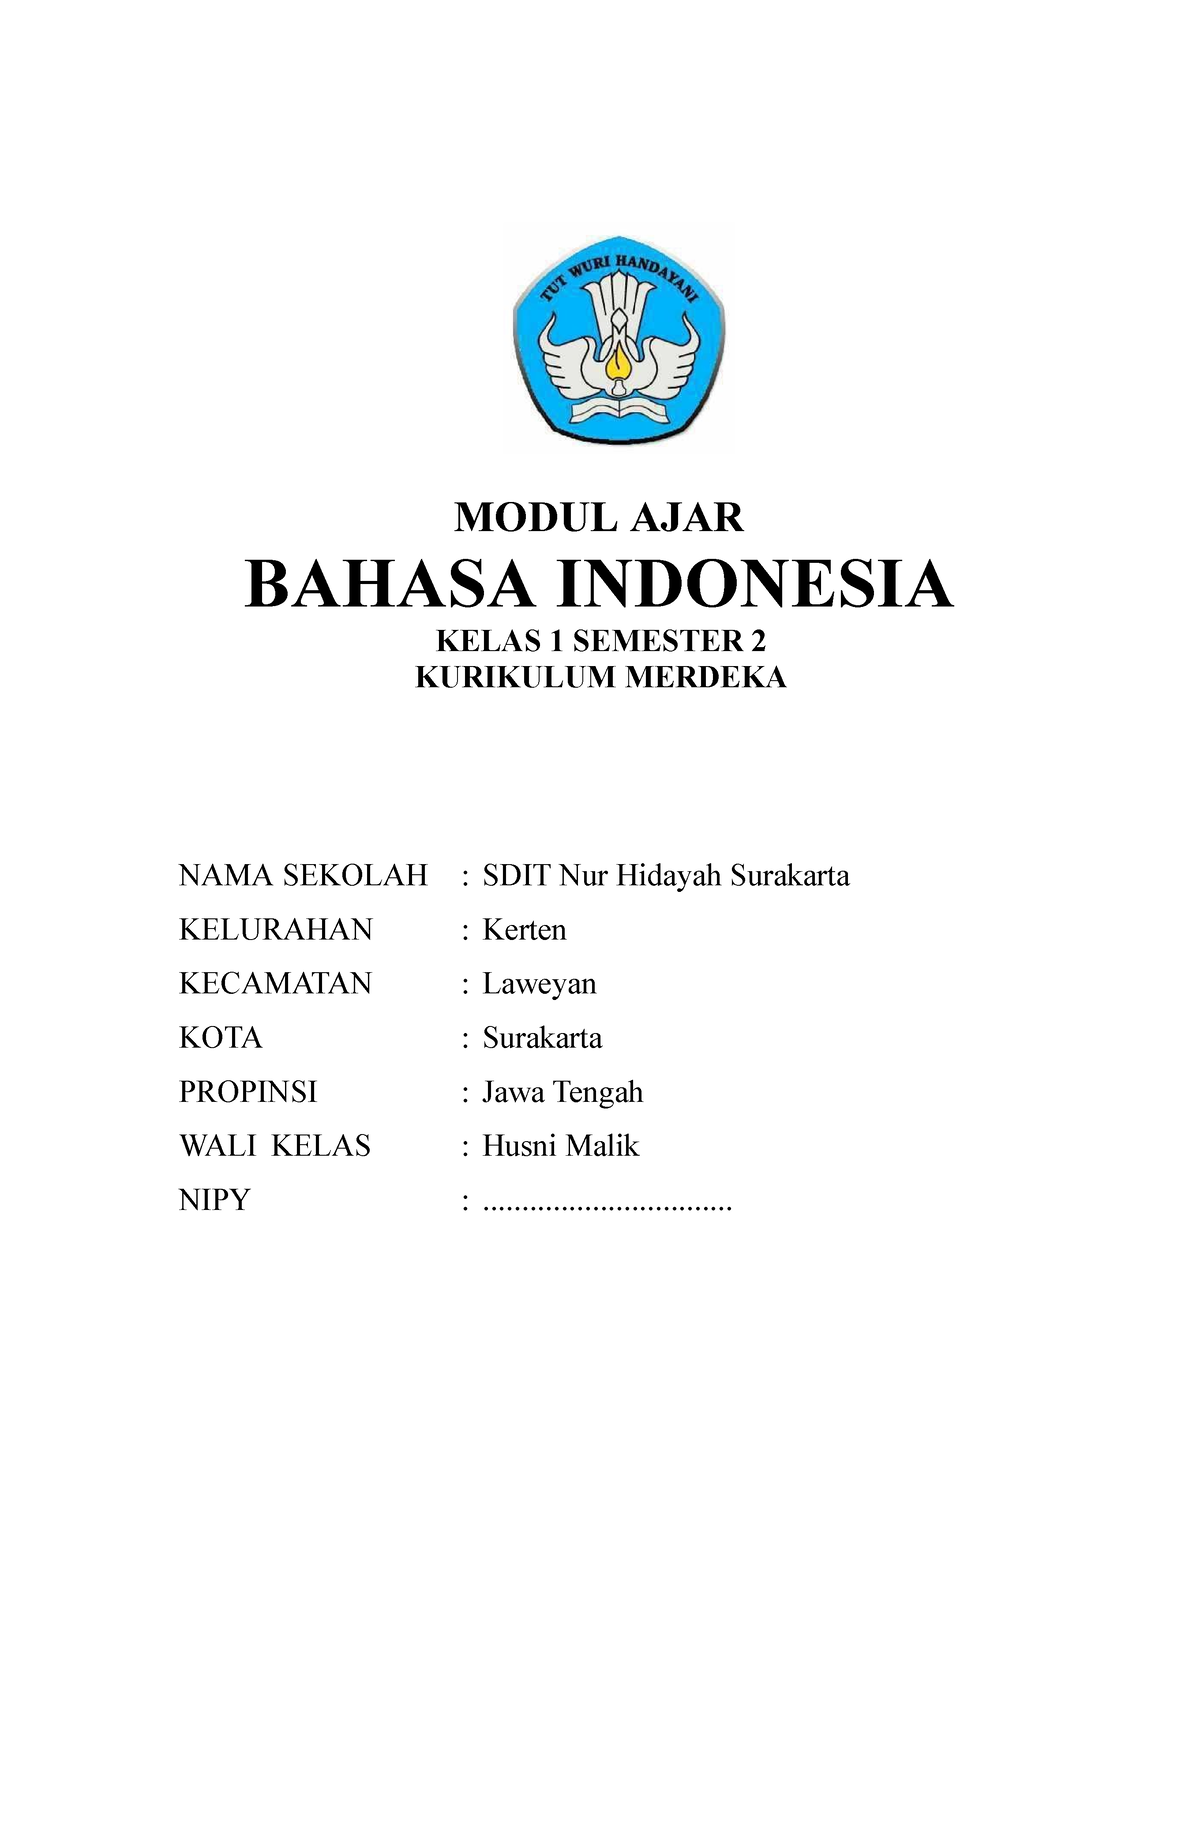 Modul Ajar Bahasa Indonesia Bab 5 Kelas 1 SD MODUL AJAR BAHASA